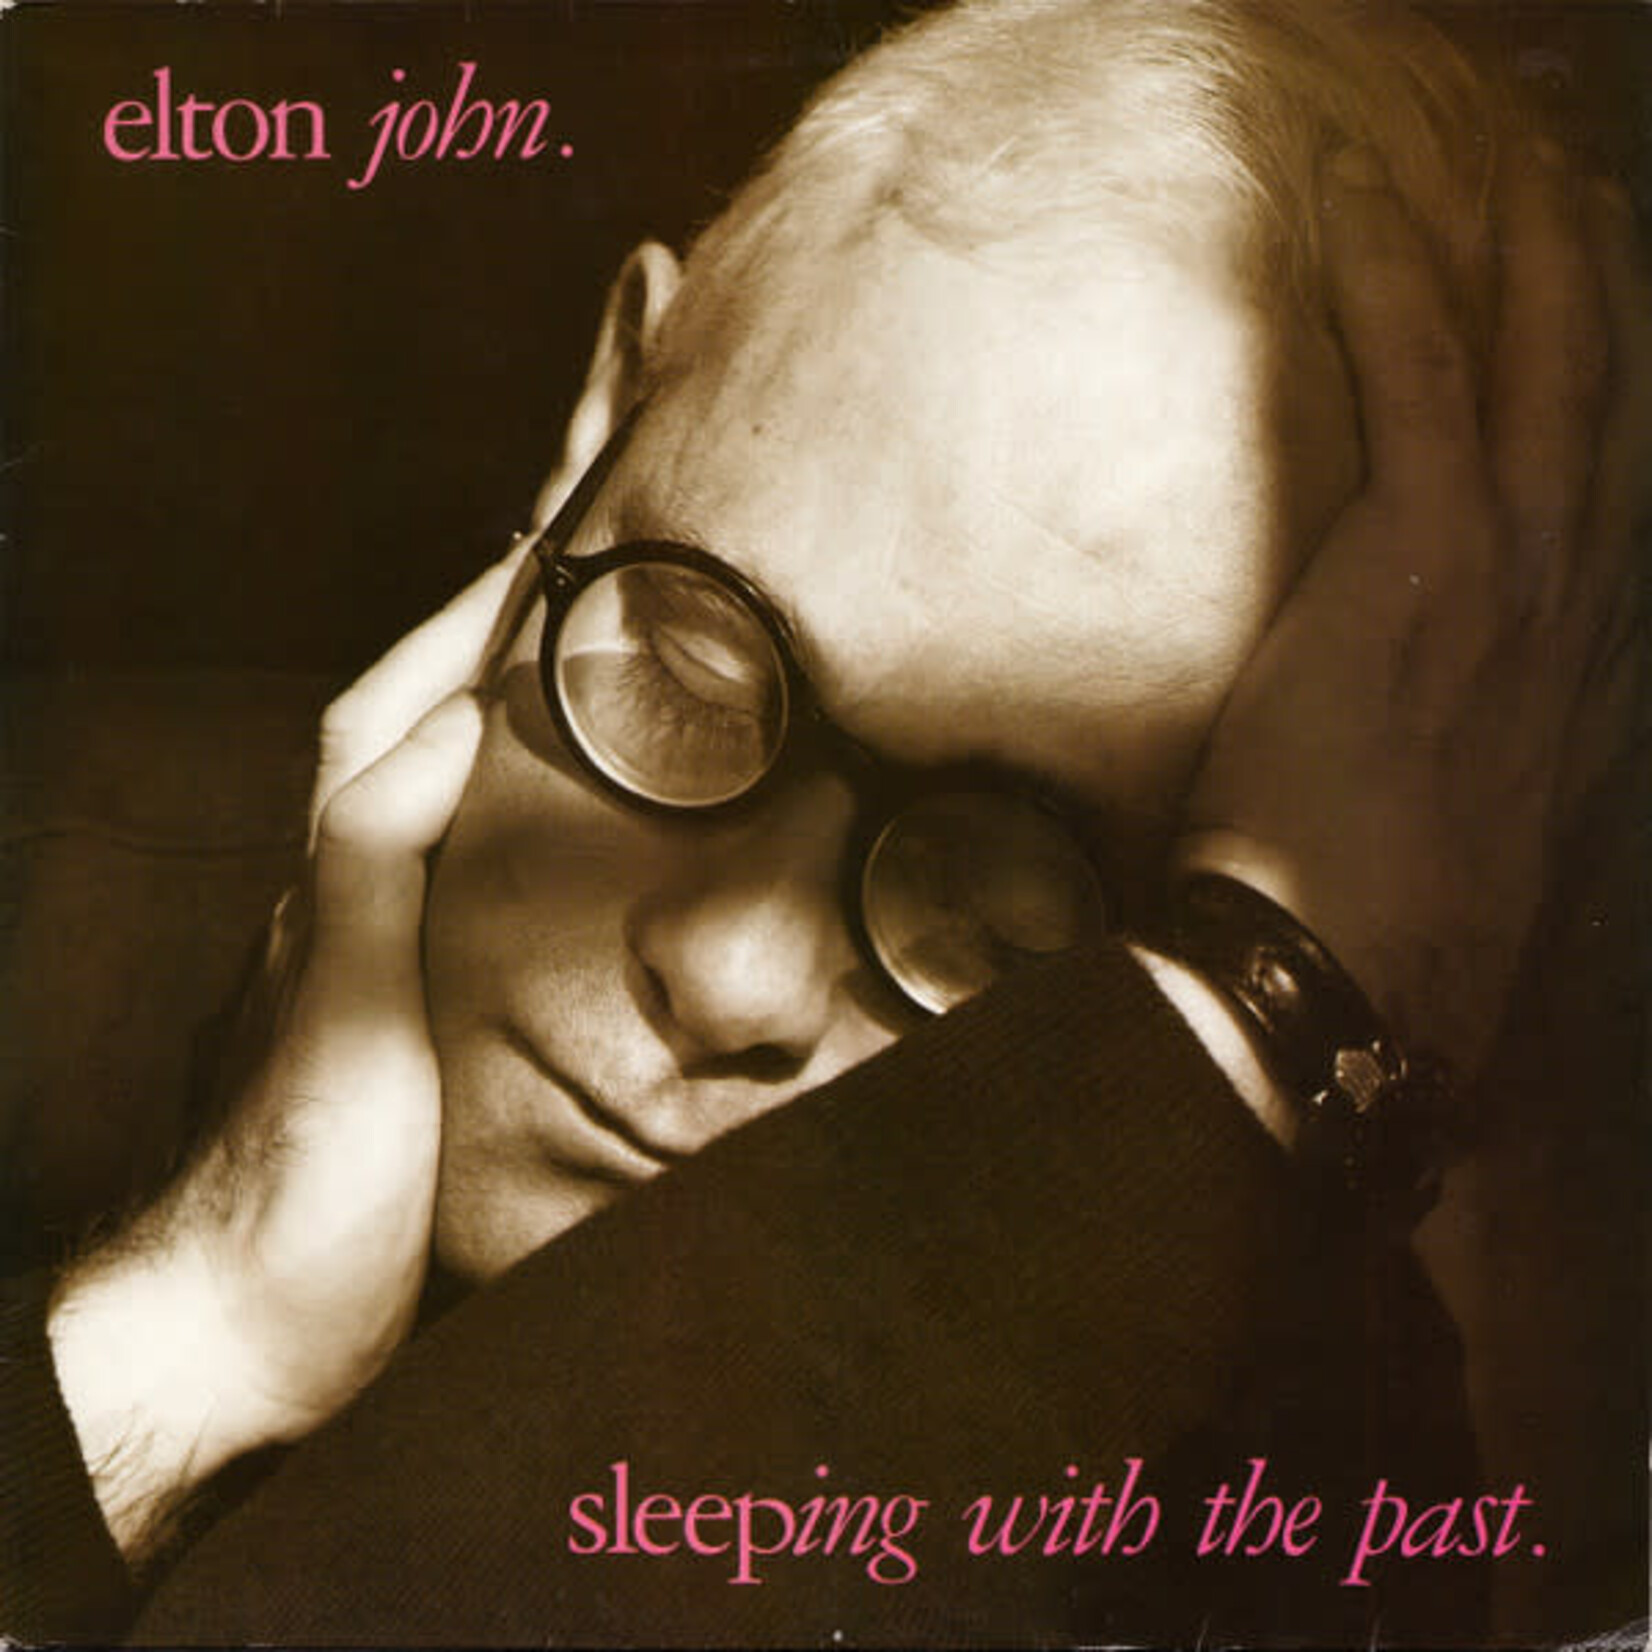 [Vintage] Elton John - Sleeping With the Past